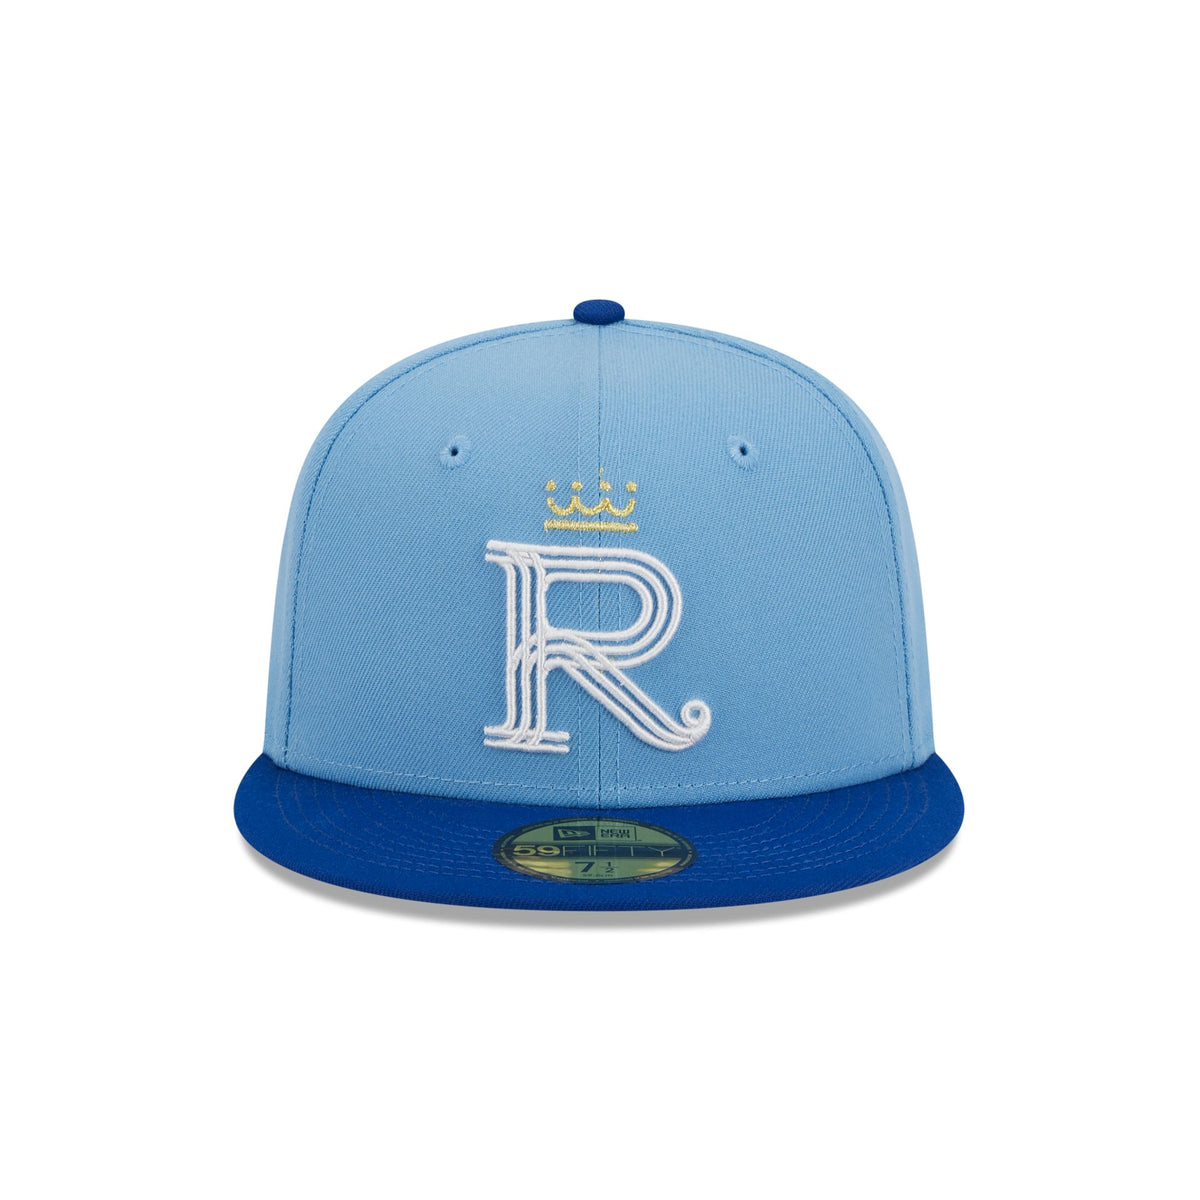 Kansas City Royals Hat Baseball Cap Fitted 7 1/2 New Era Vintage